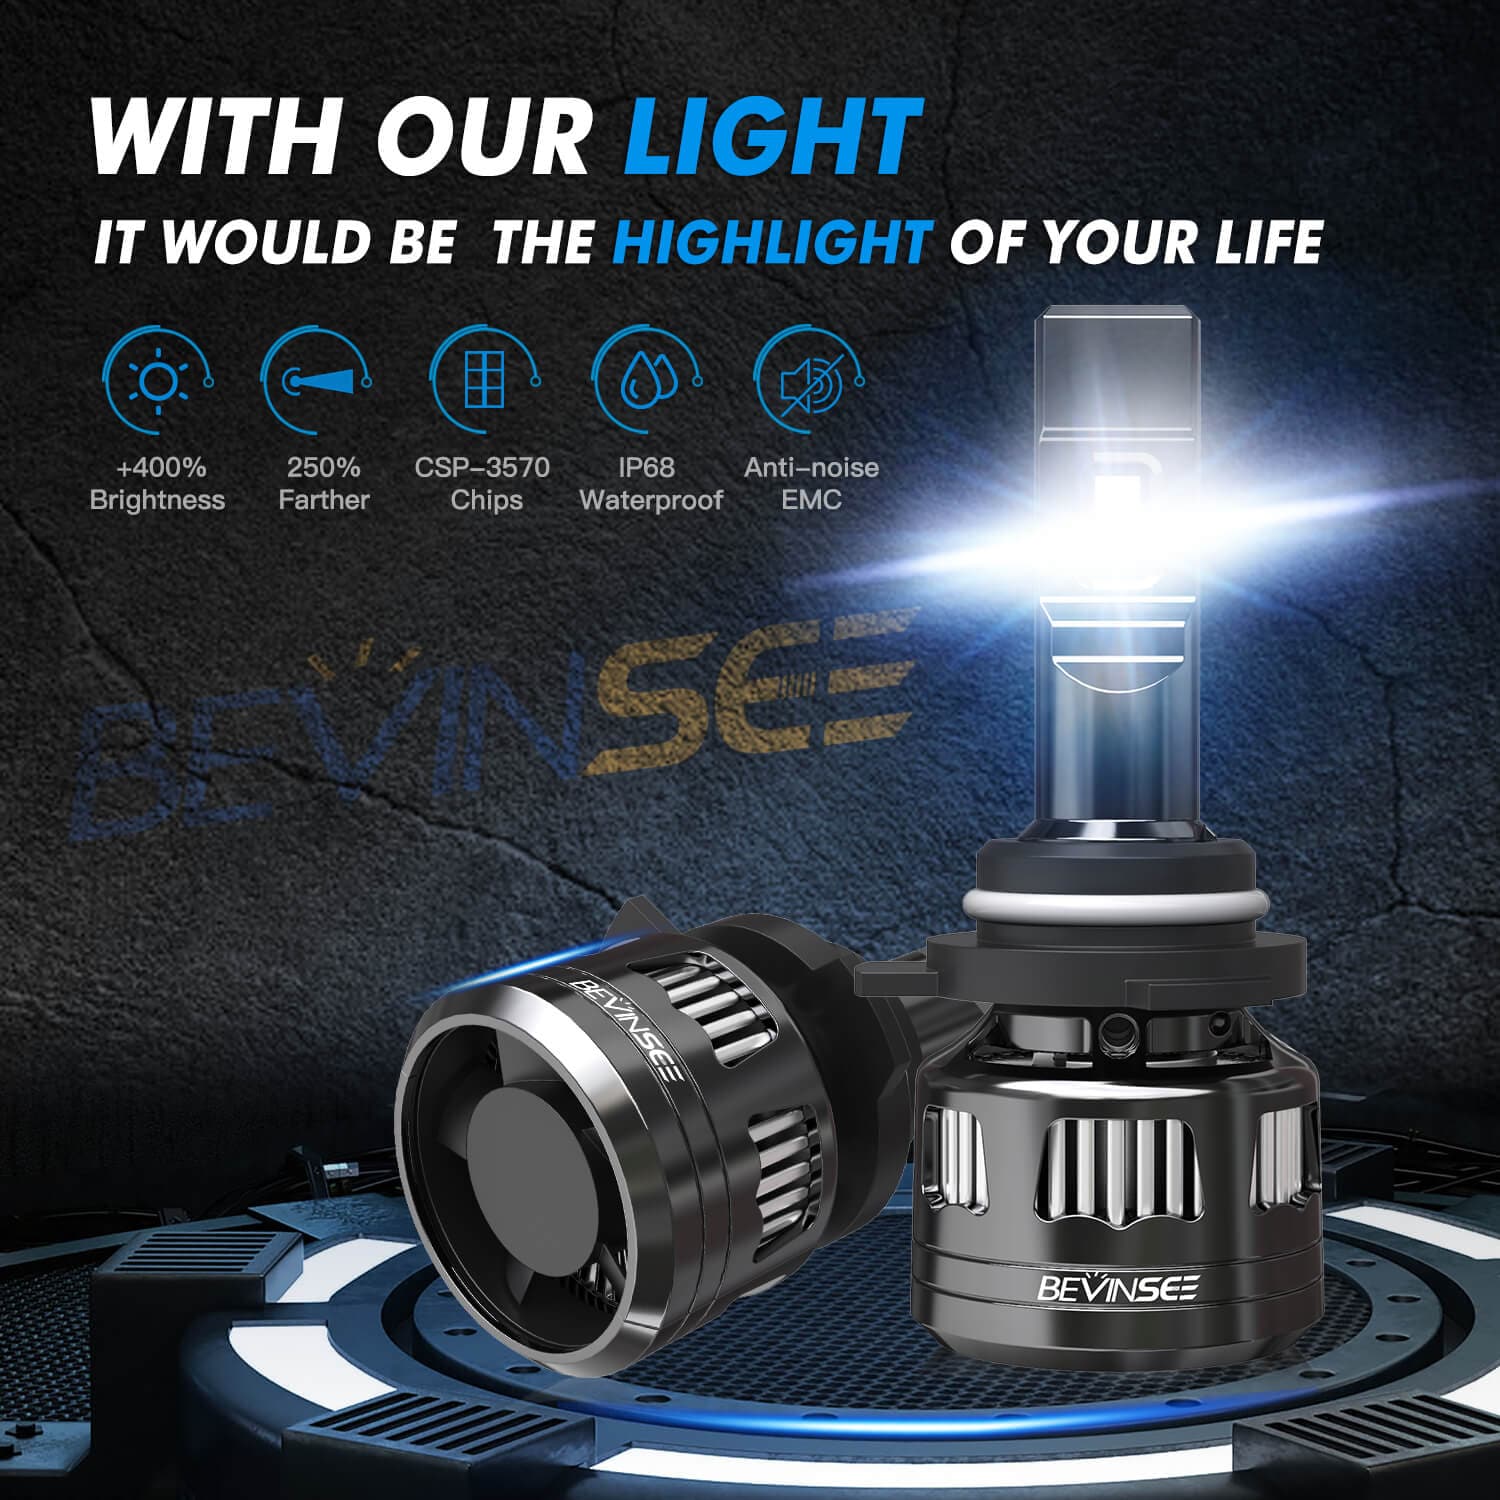 BEVINSEE V45 9012(HIR2) LED Headlight Bulb120W 22000 Lumens